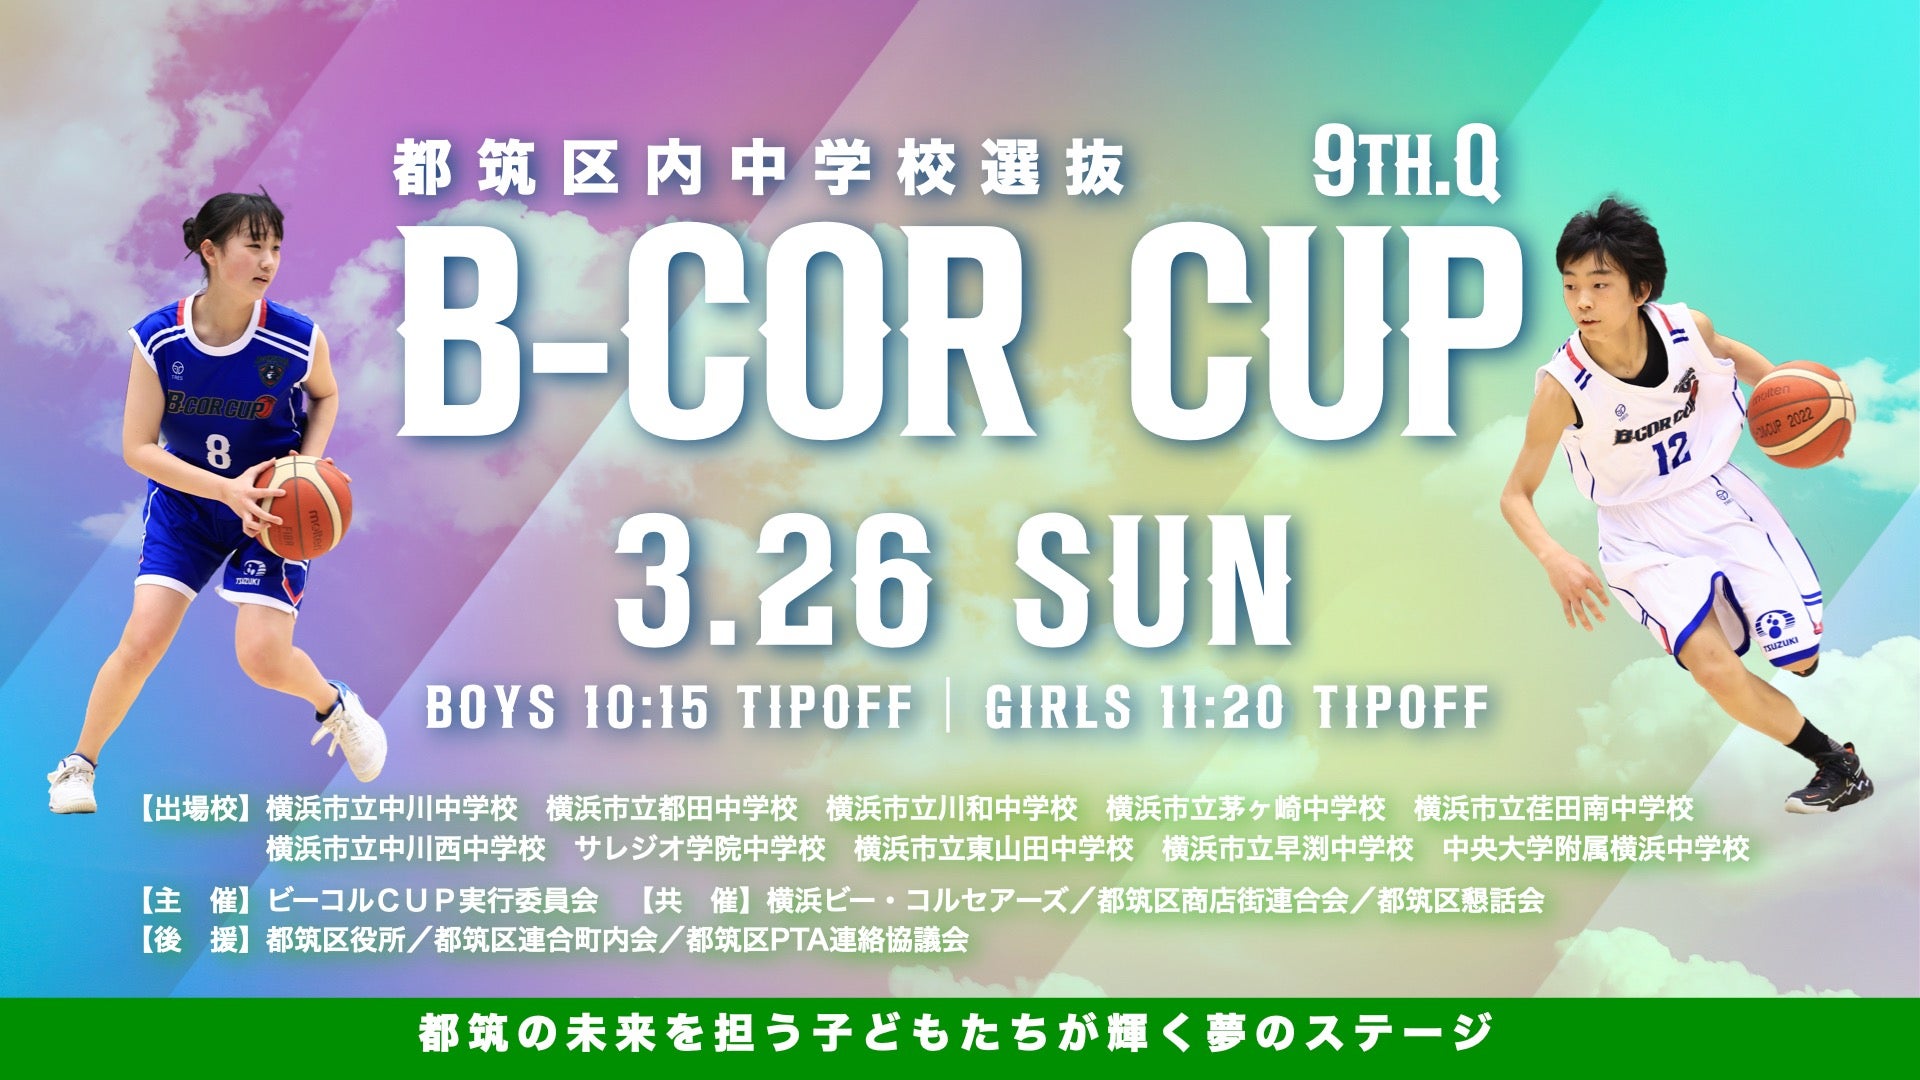 B-COR CUP